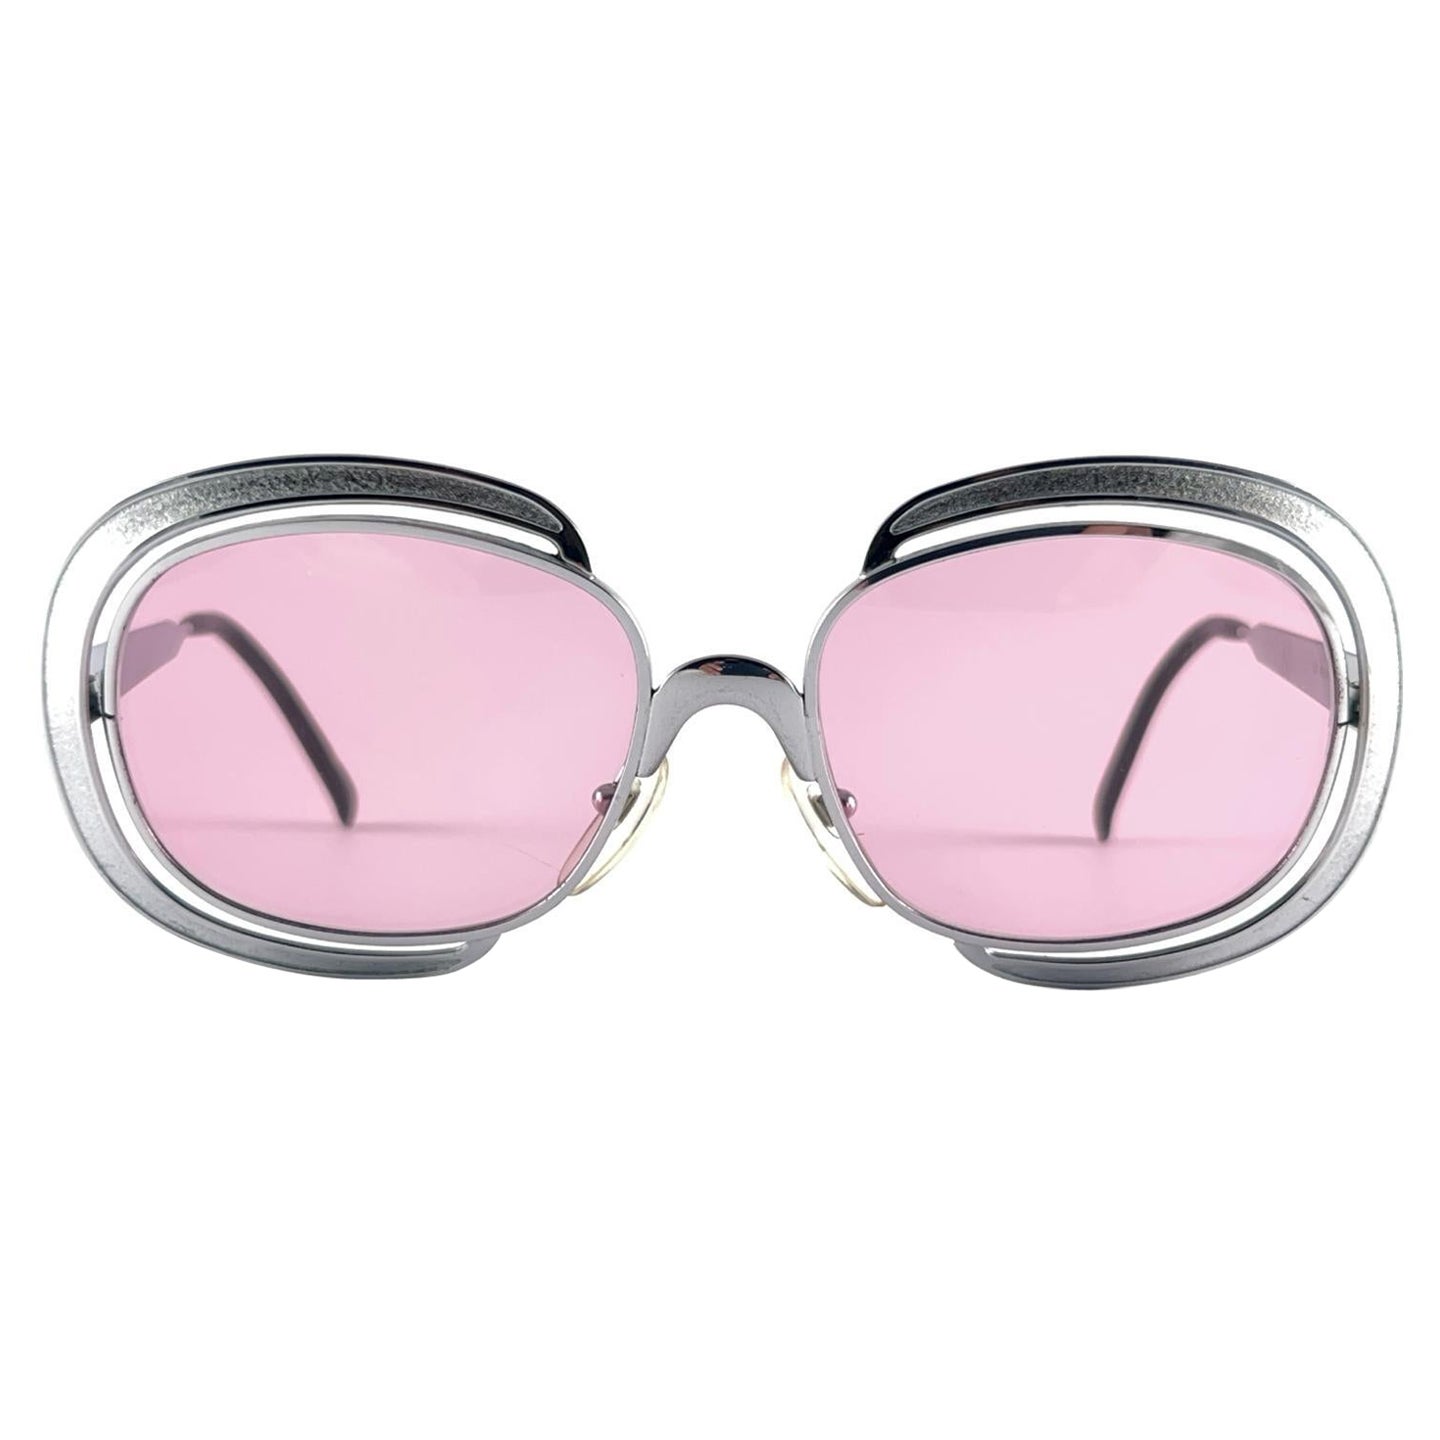 Vintage Christian Dior Silver Frame Pink Lenses Sunglasses 80's Made in Austria